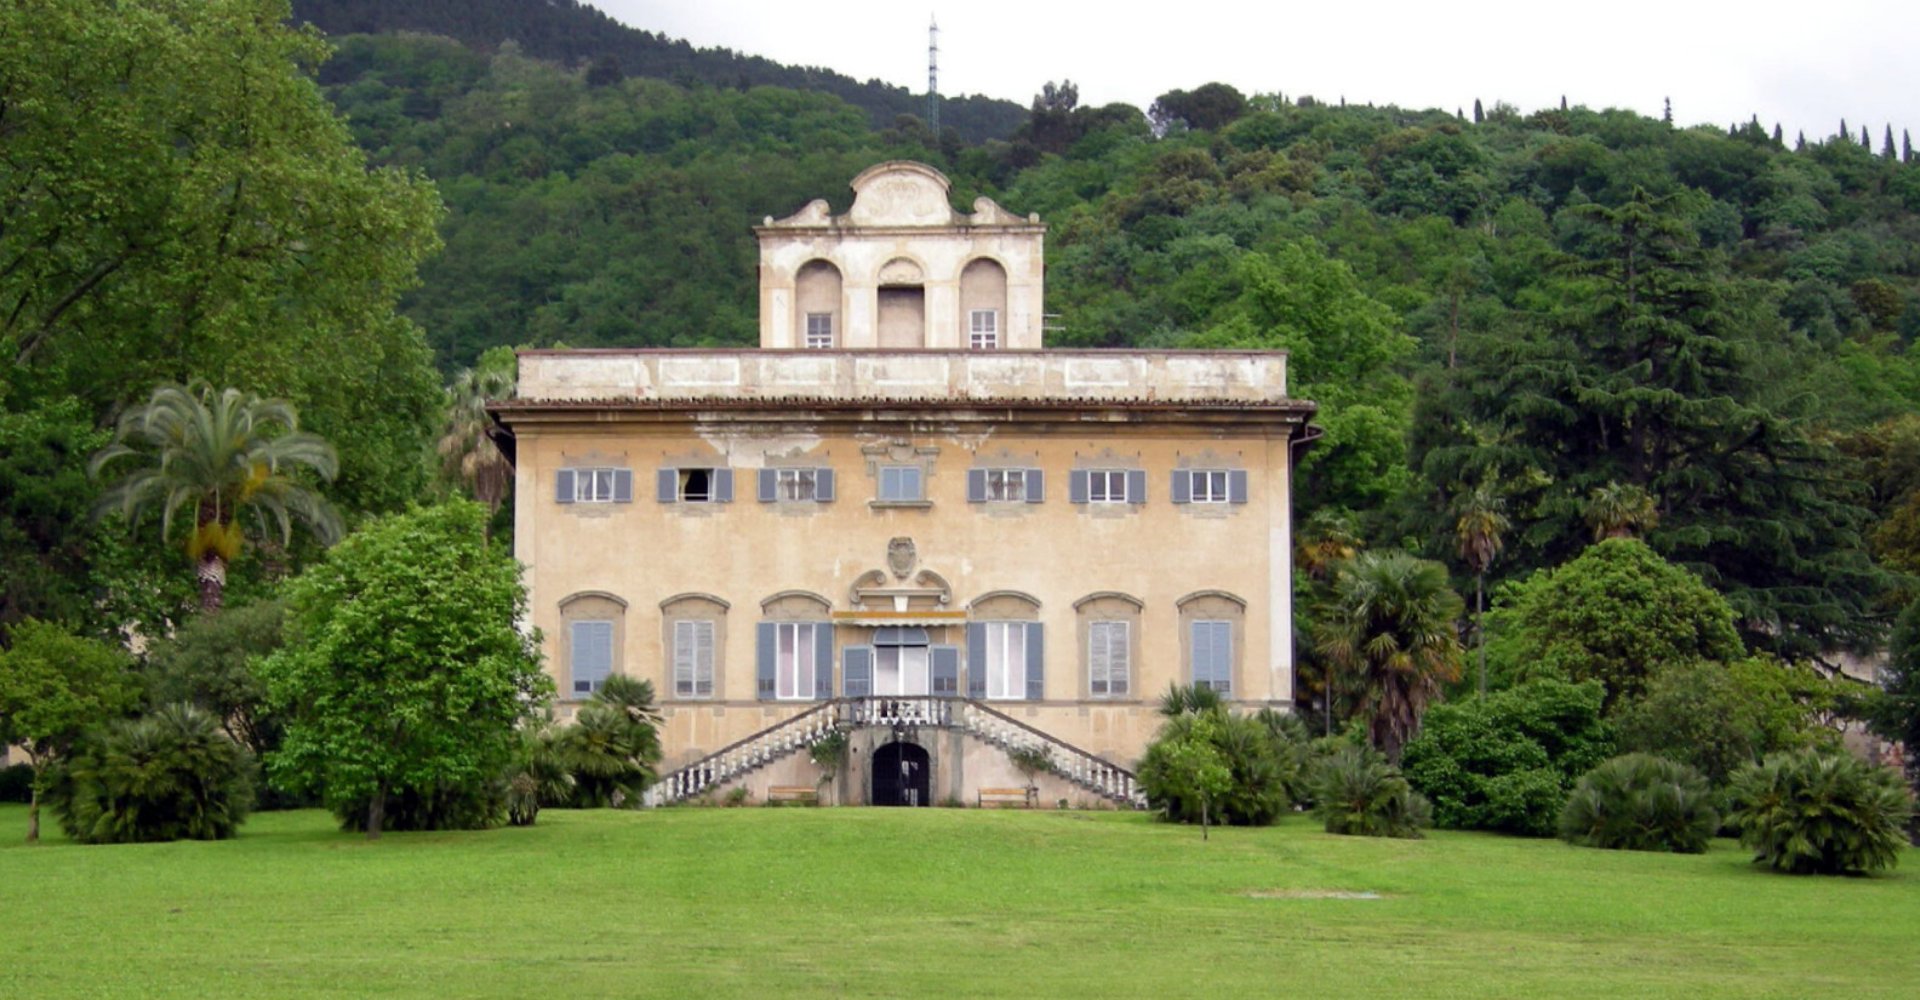 Villa de Corliano en San Giuliano Terme